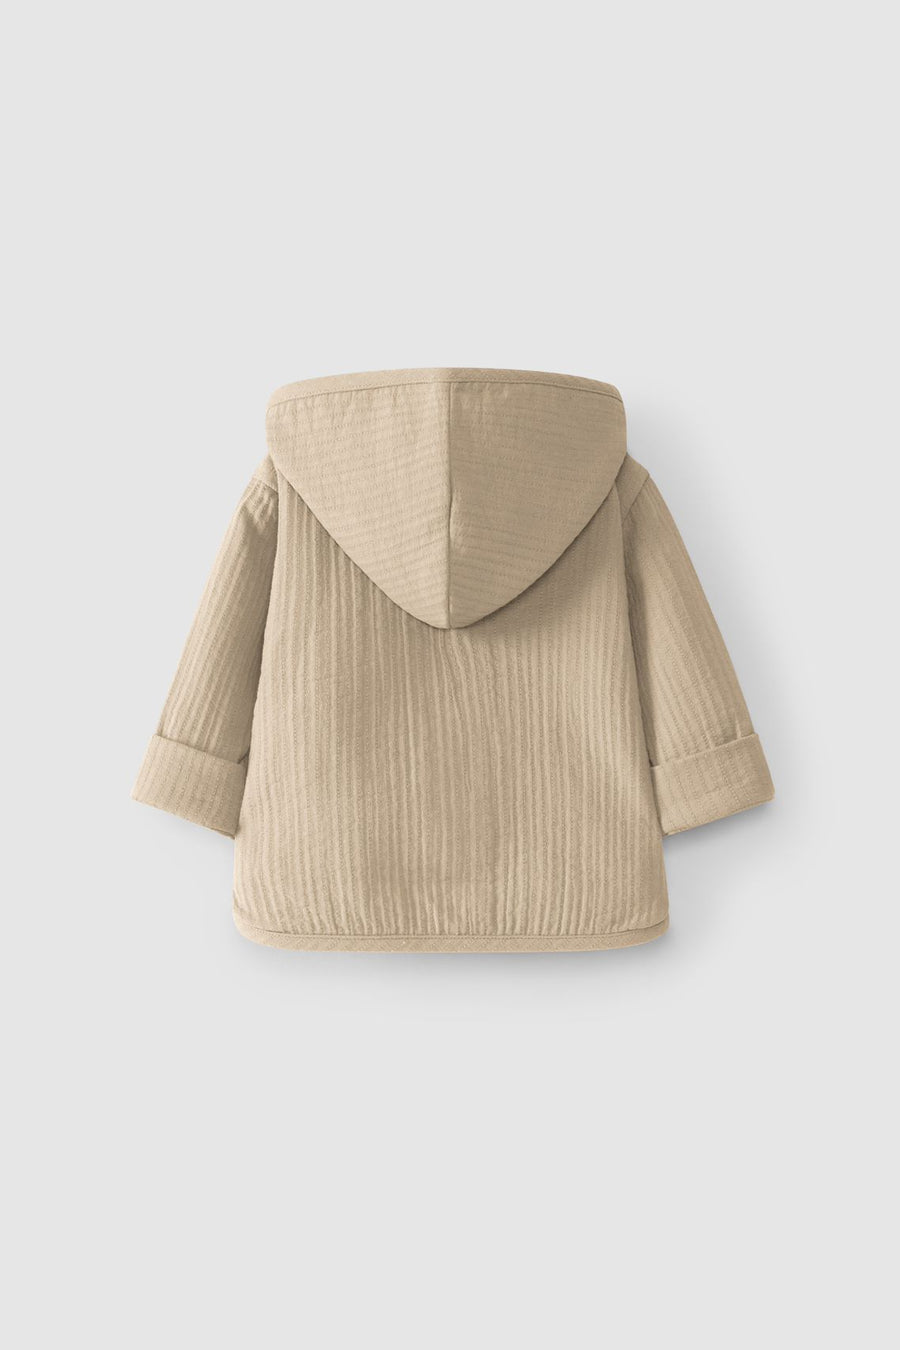 Plain hooded jacket - Taupe